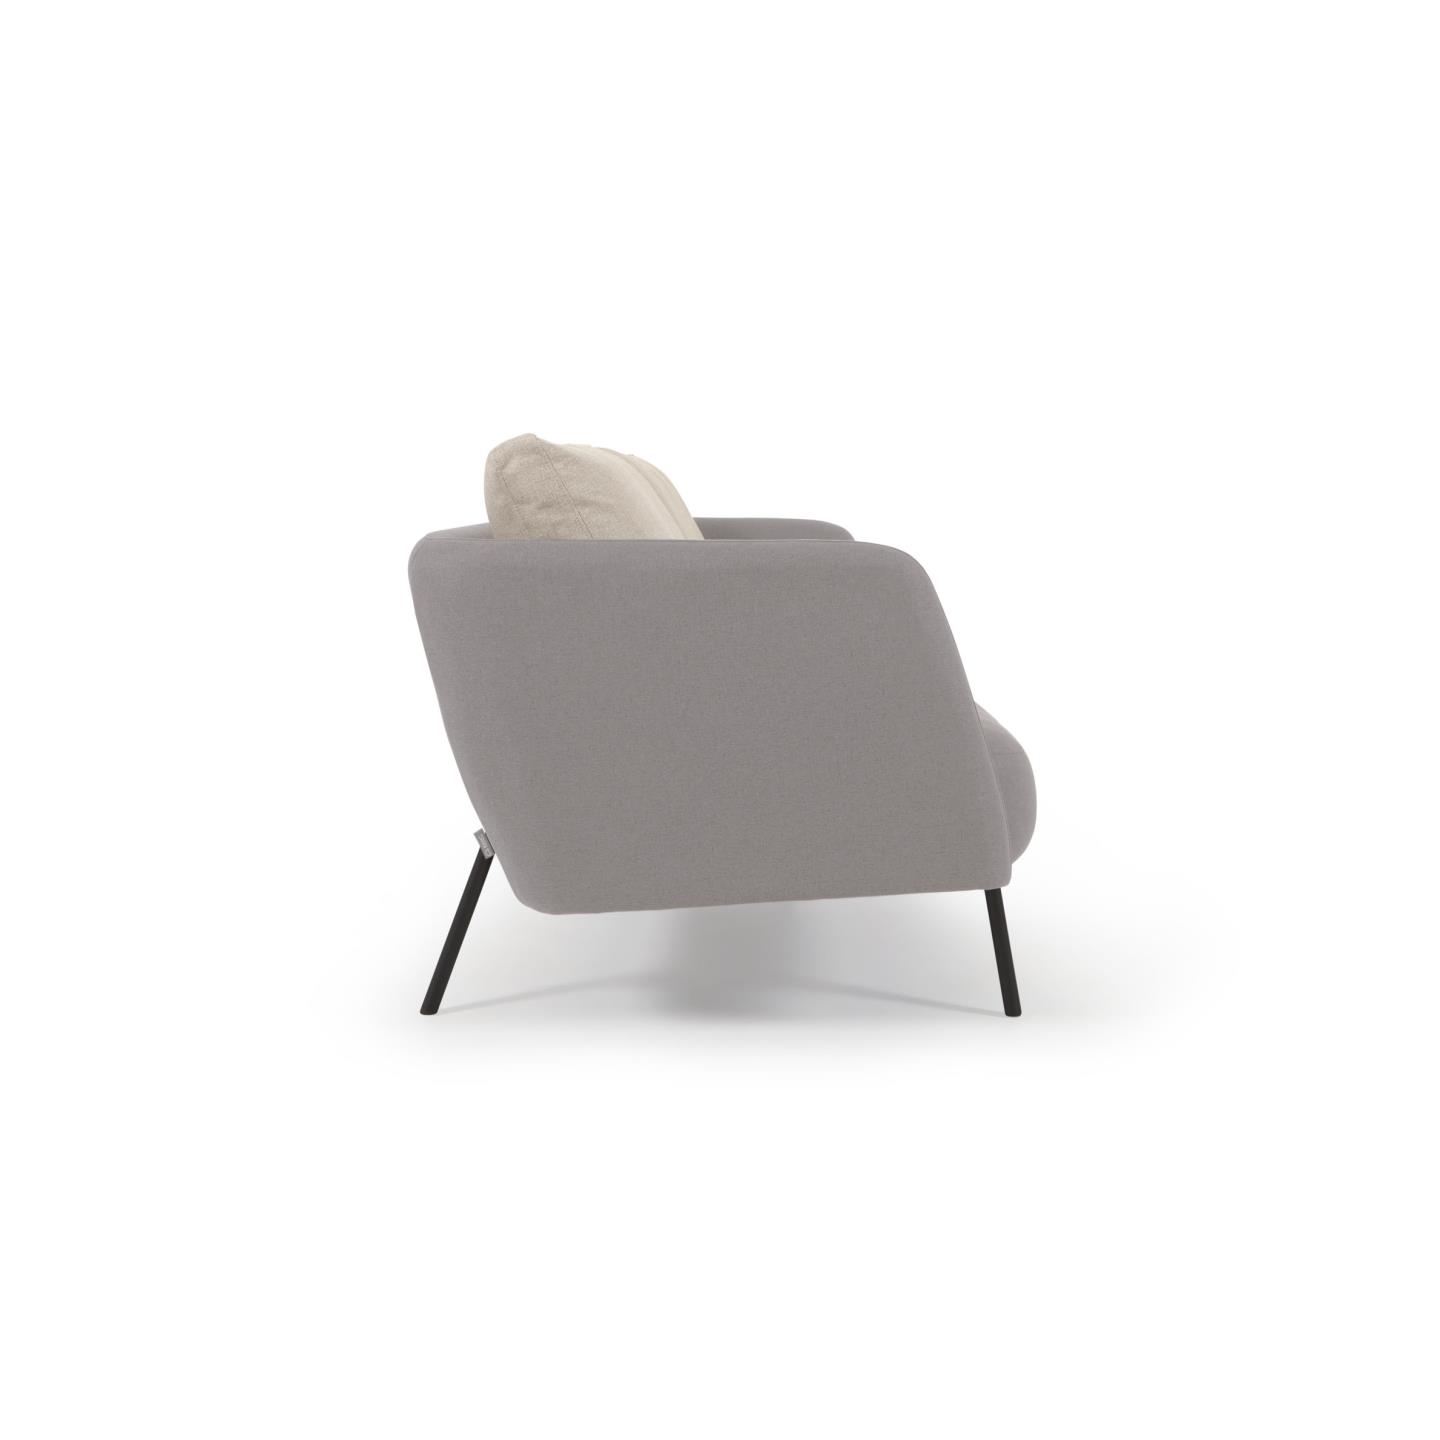 Three-seater grey Walkyria sofa beige cushions and metal legs with black finish 195 cm